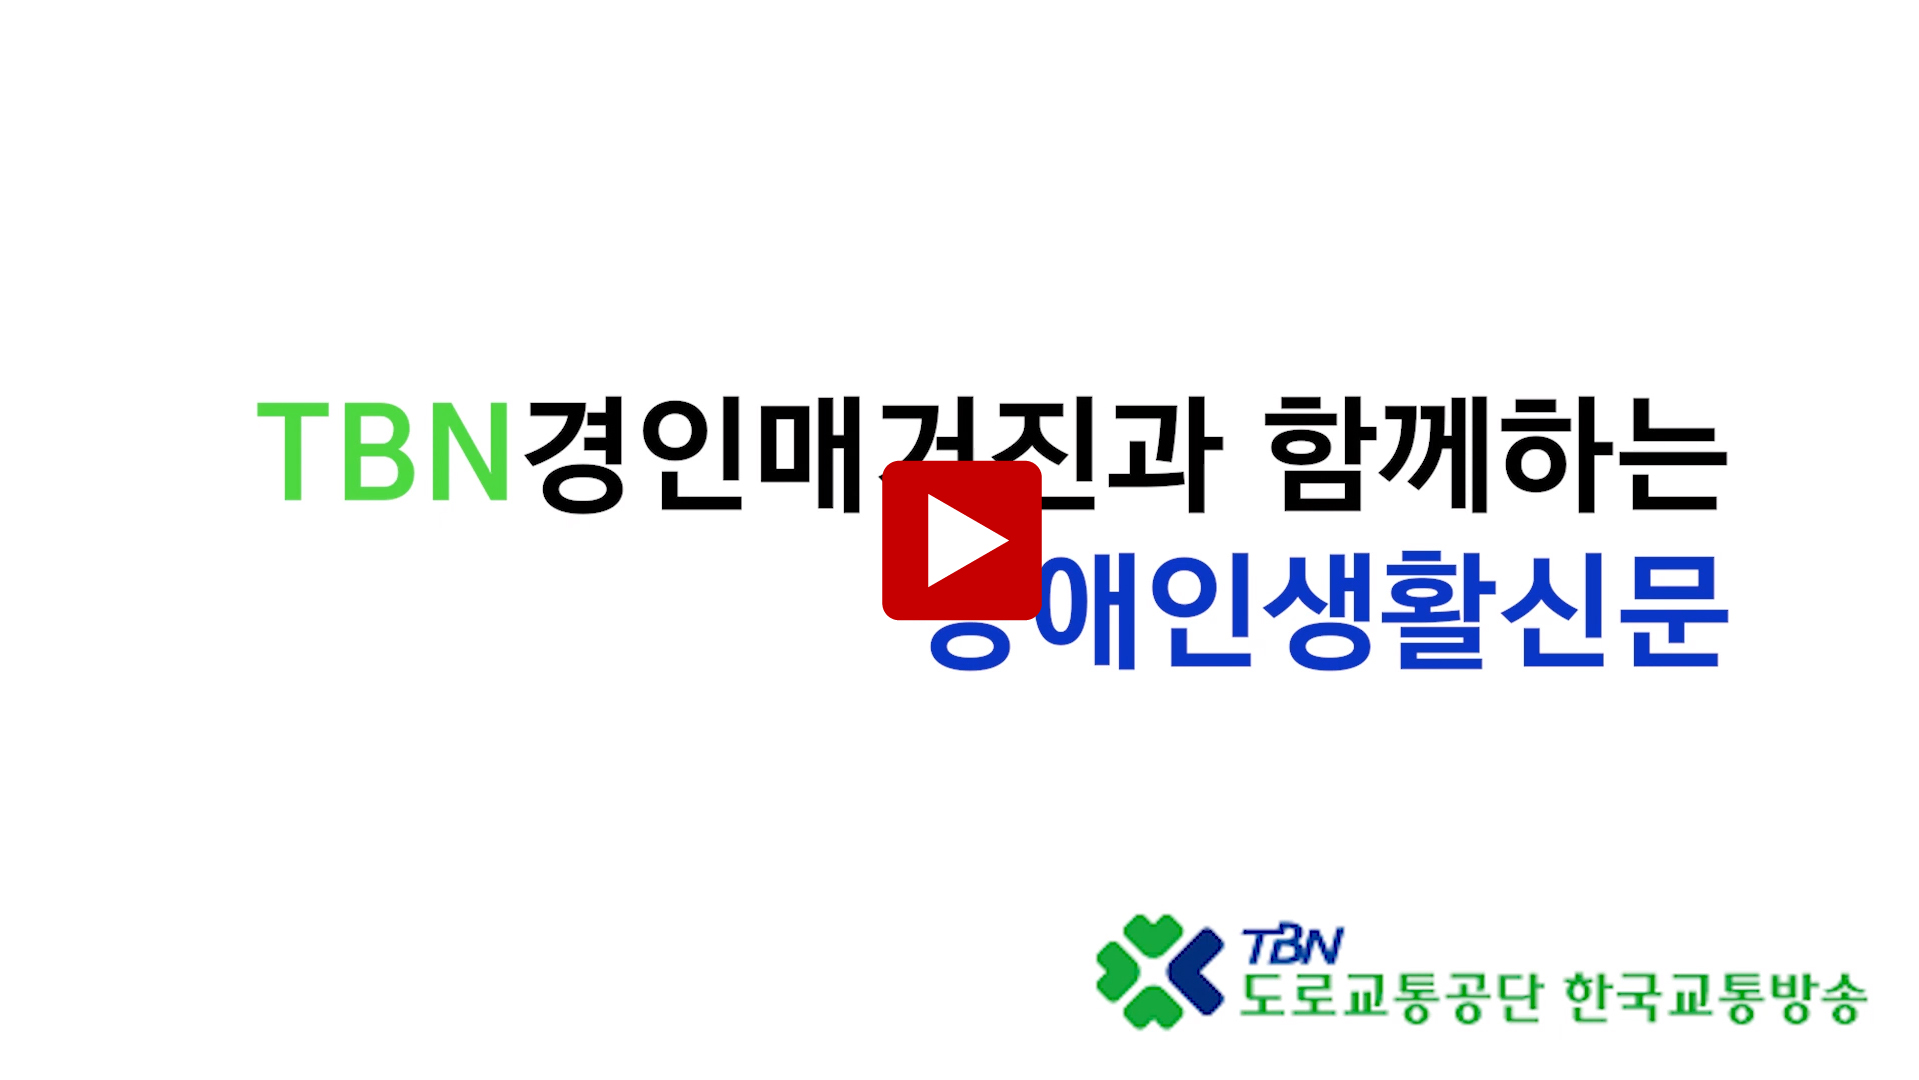 TBN경인매거진과 함께하는 장애인생활신문 -2022년 5월 11일 방송